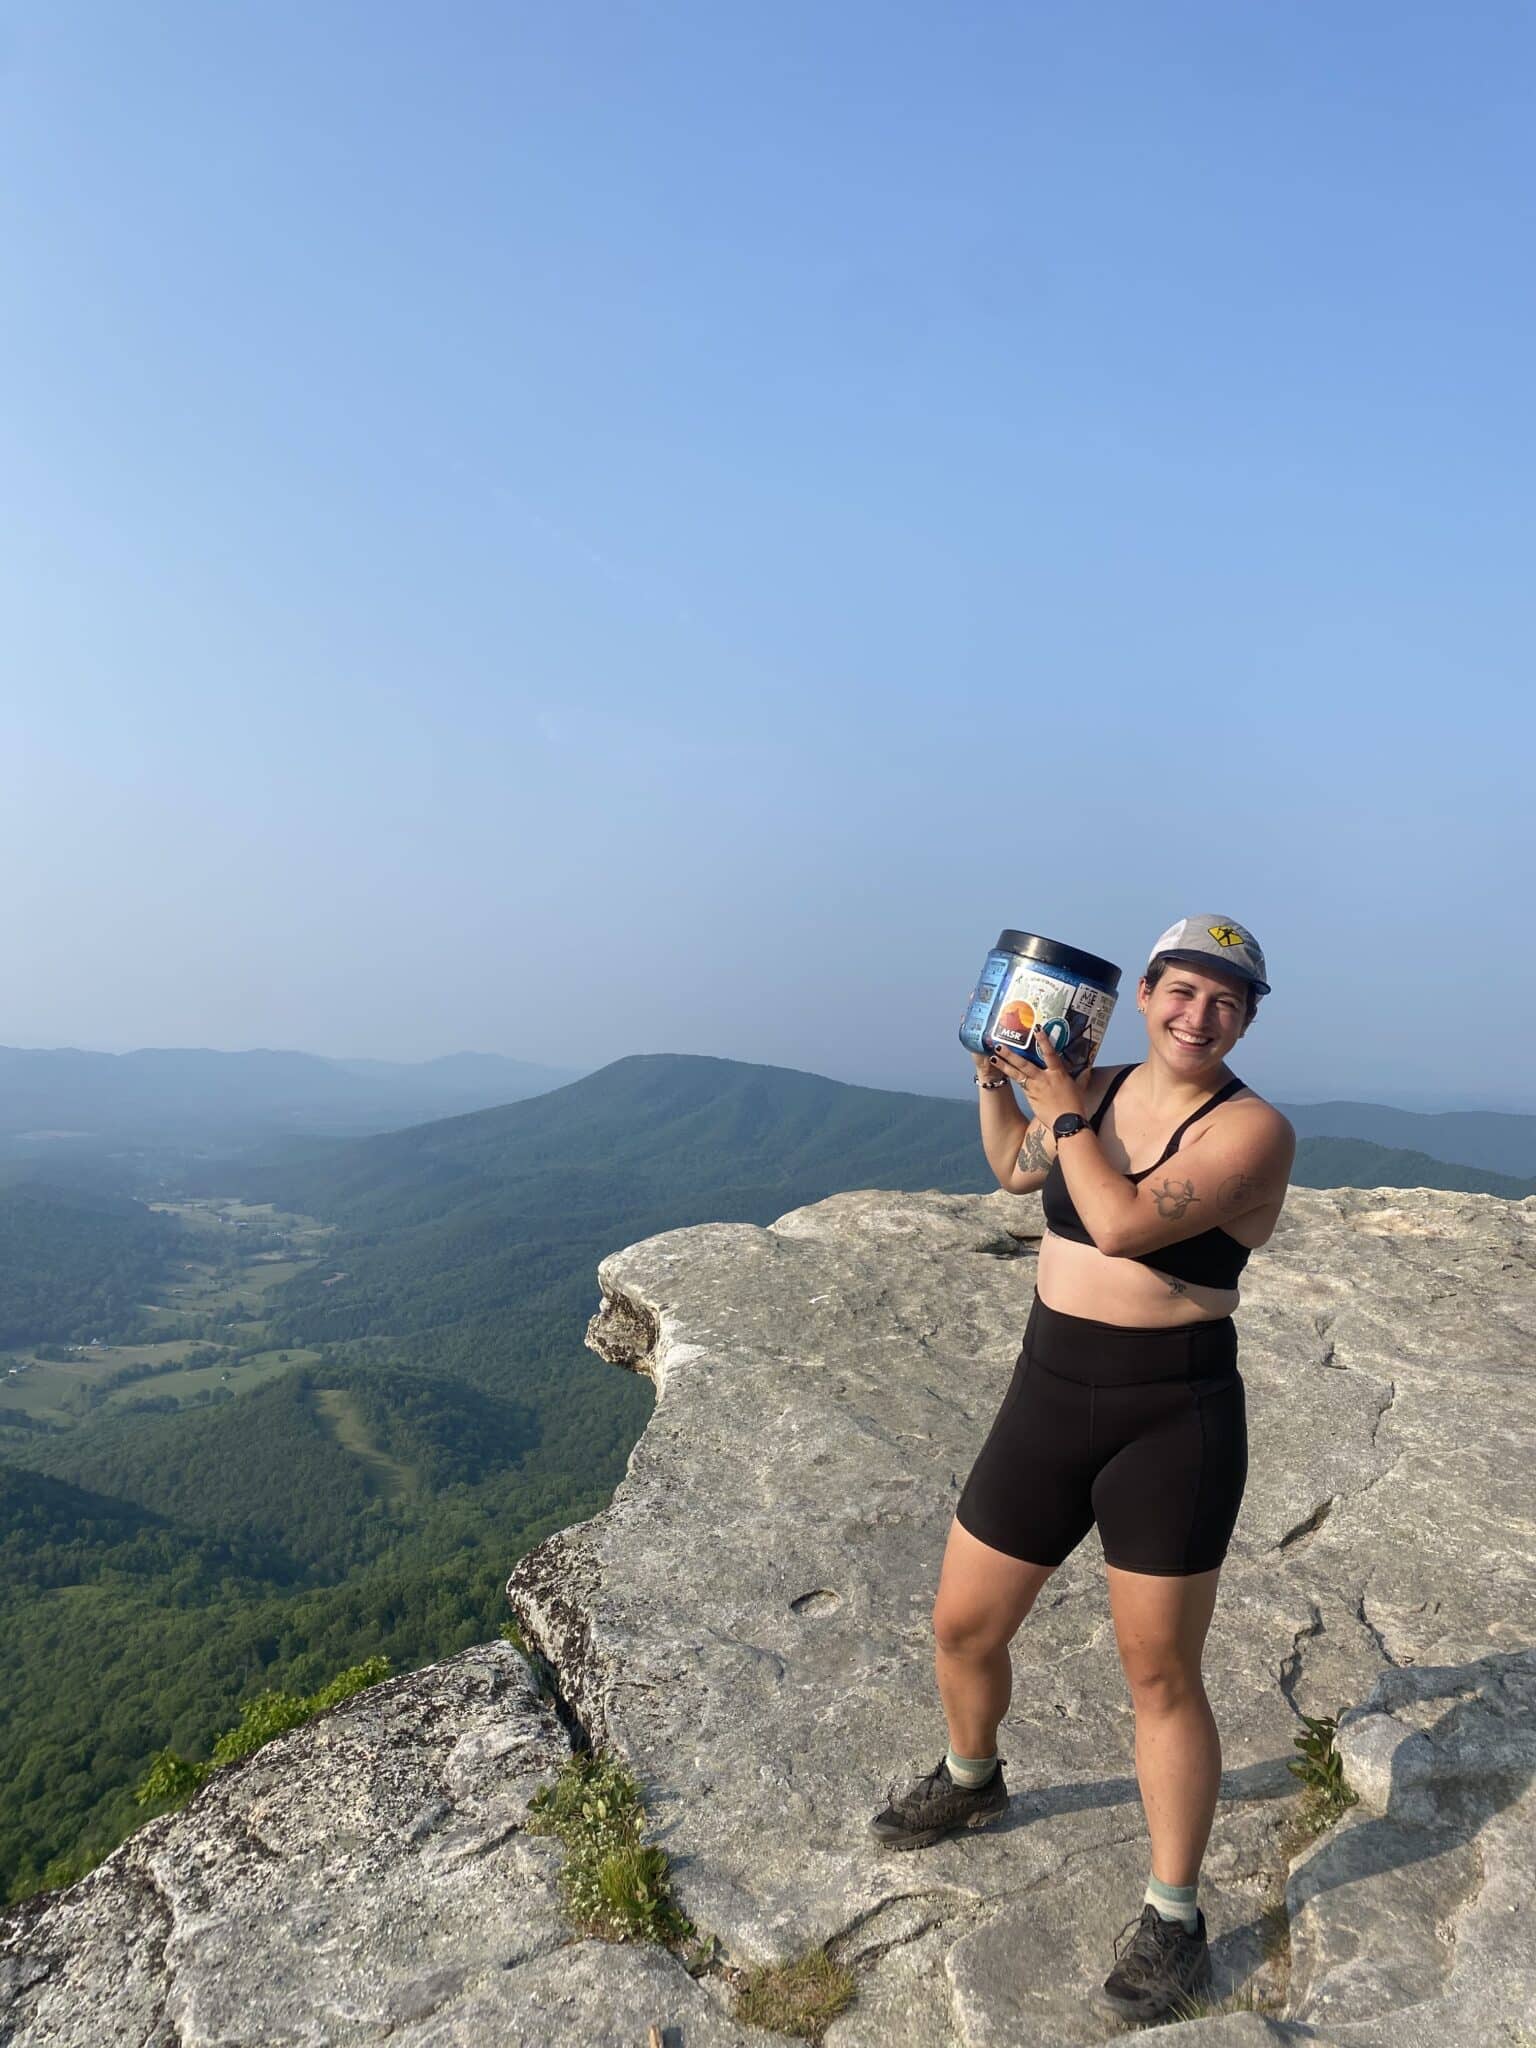 An Appalachian Trail Thru-hiker lifts a bear canister at a viewpoint.